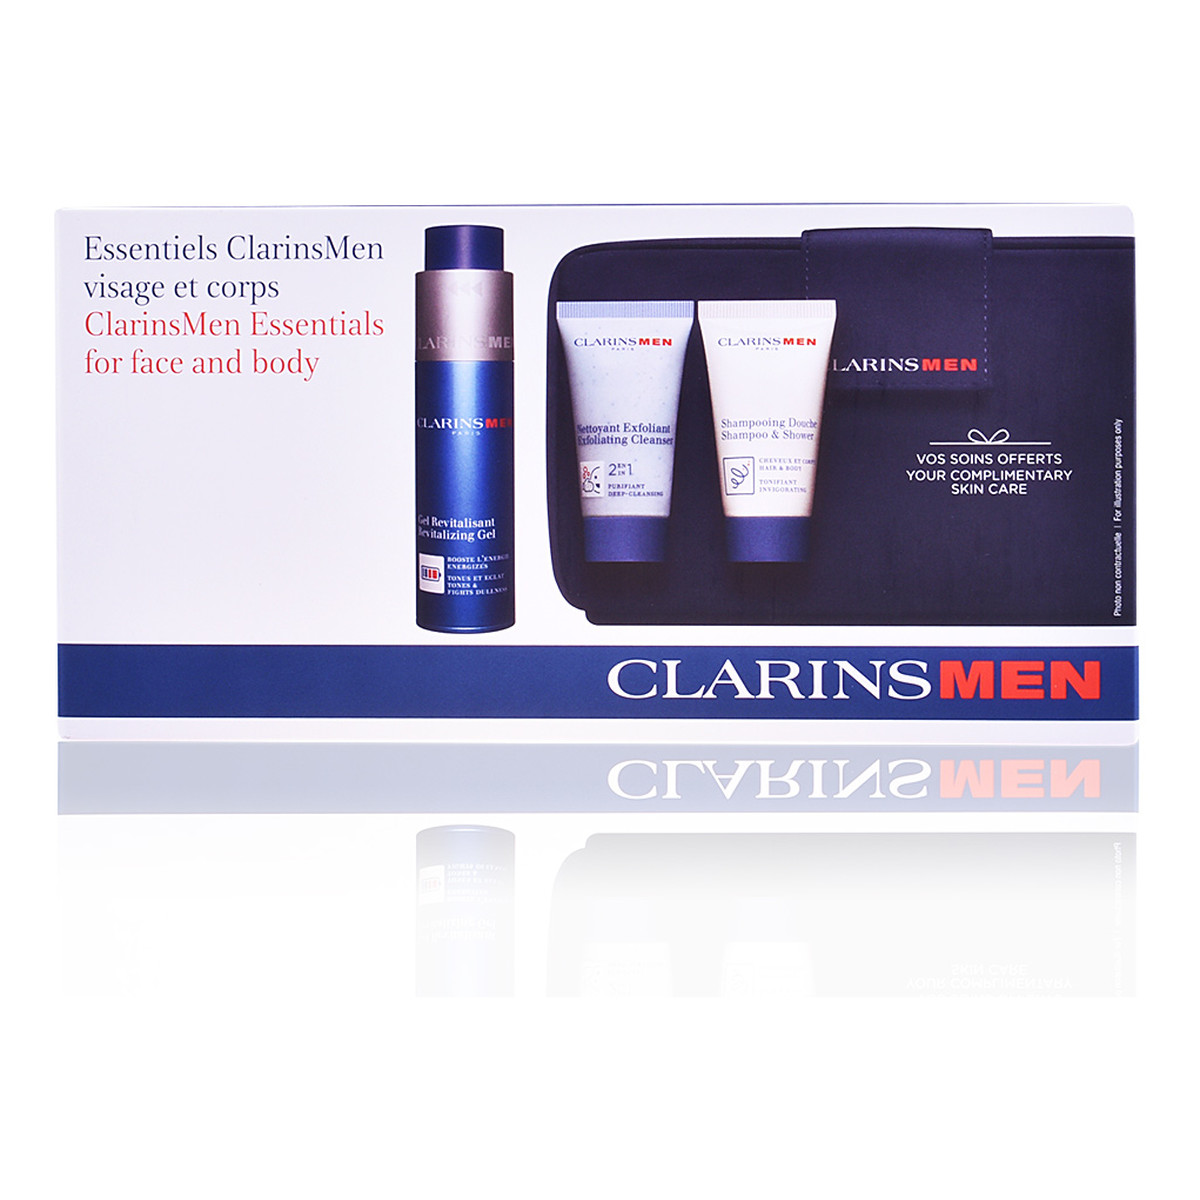 Clarins Men Revitalizing Gel 50ml + Exfoliating Cleasner 30ml + Shampoo & Shower 30ml + kosmetyczka